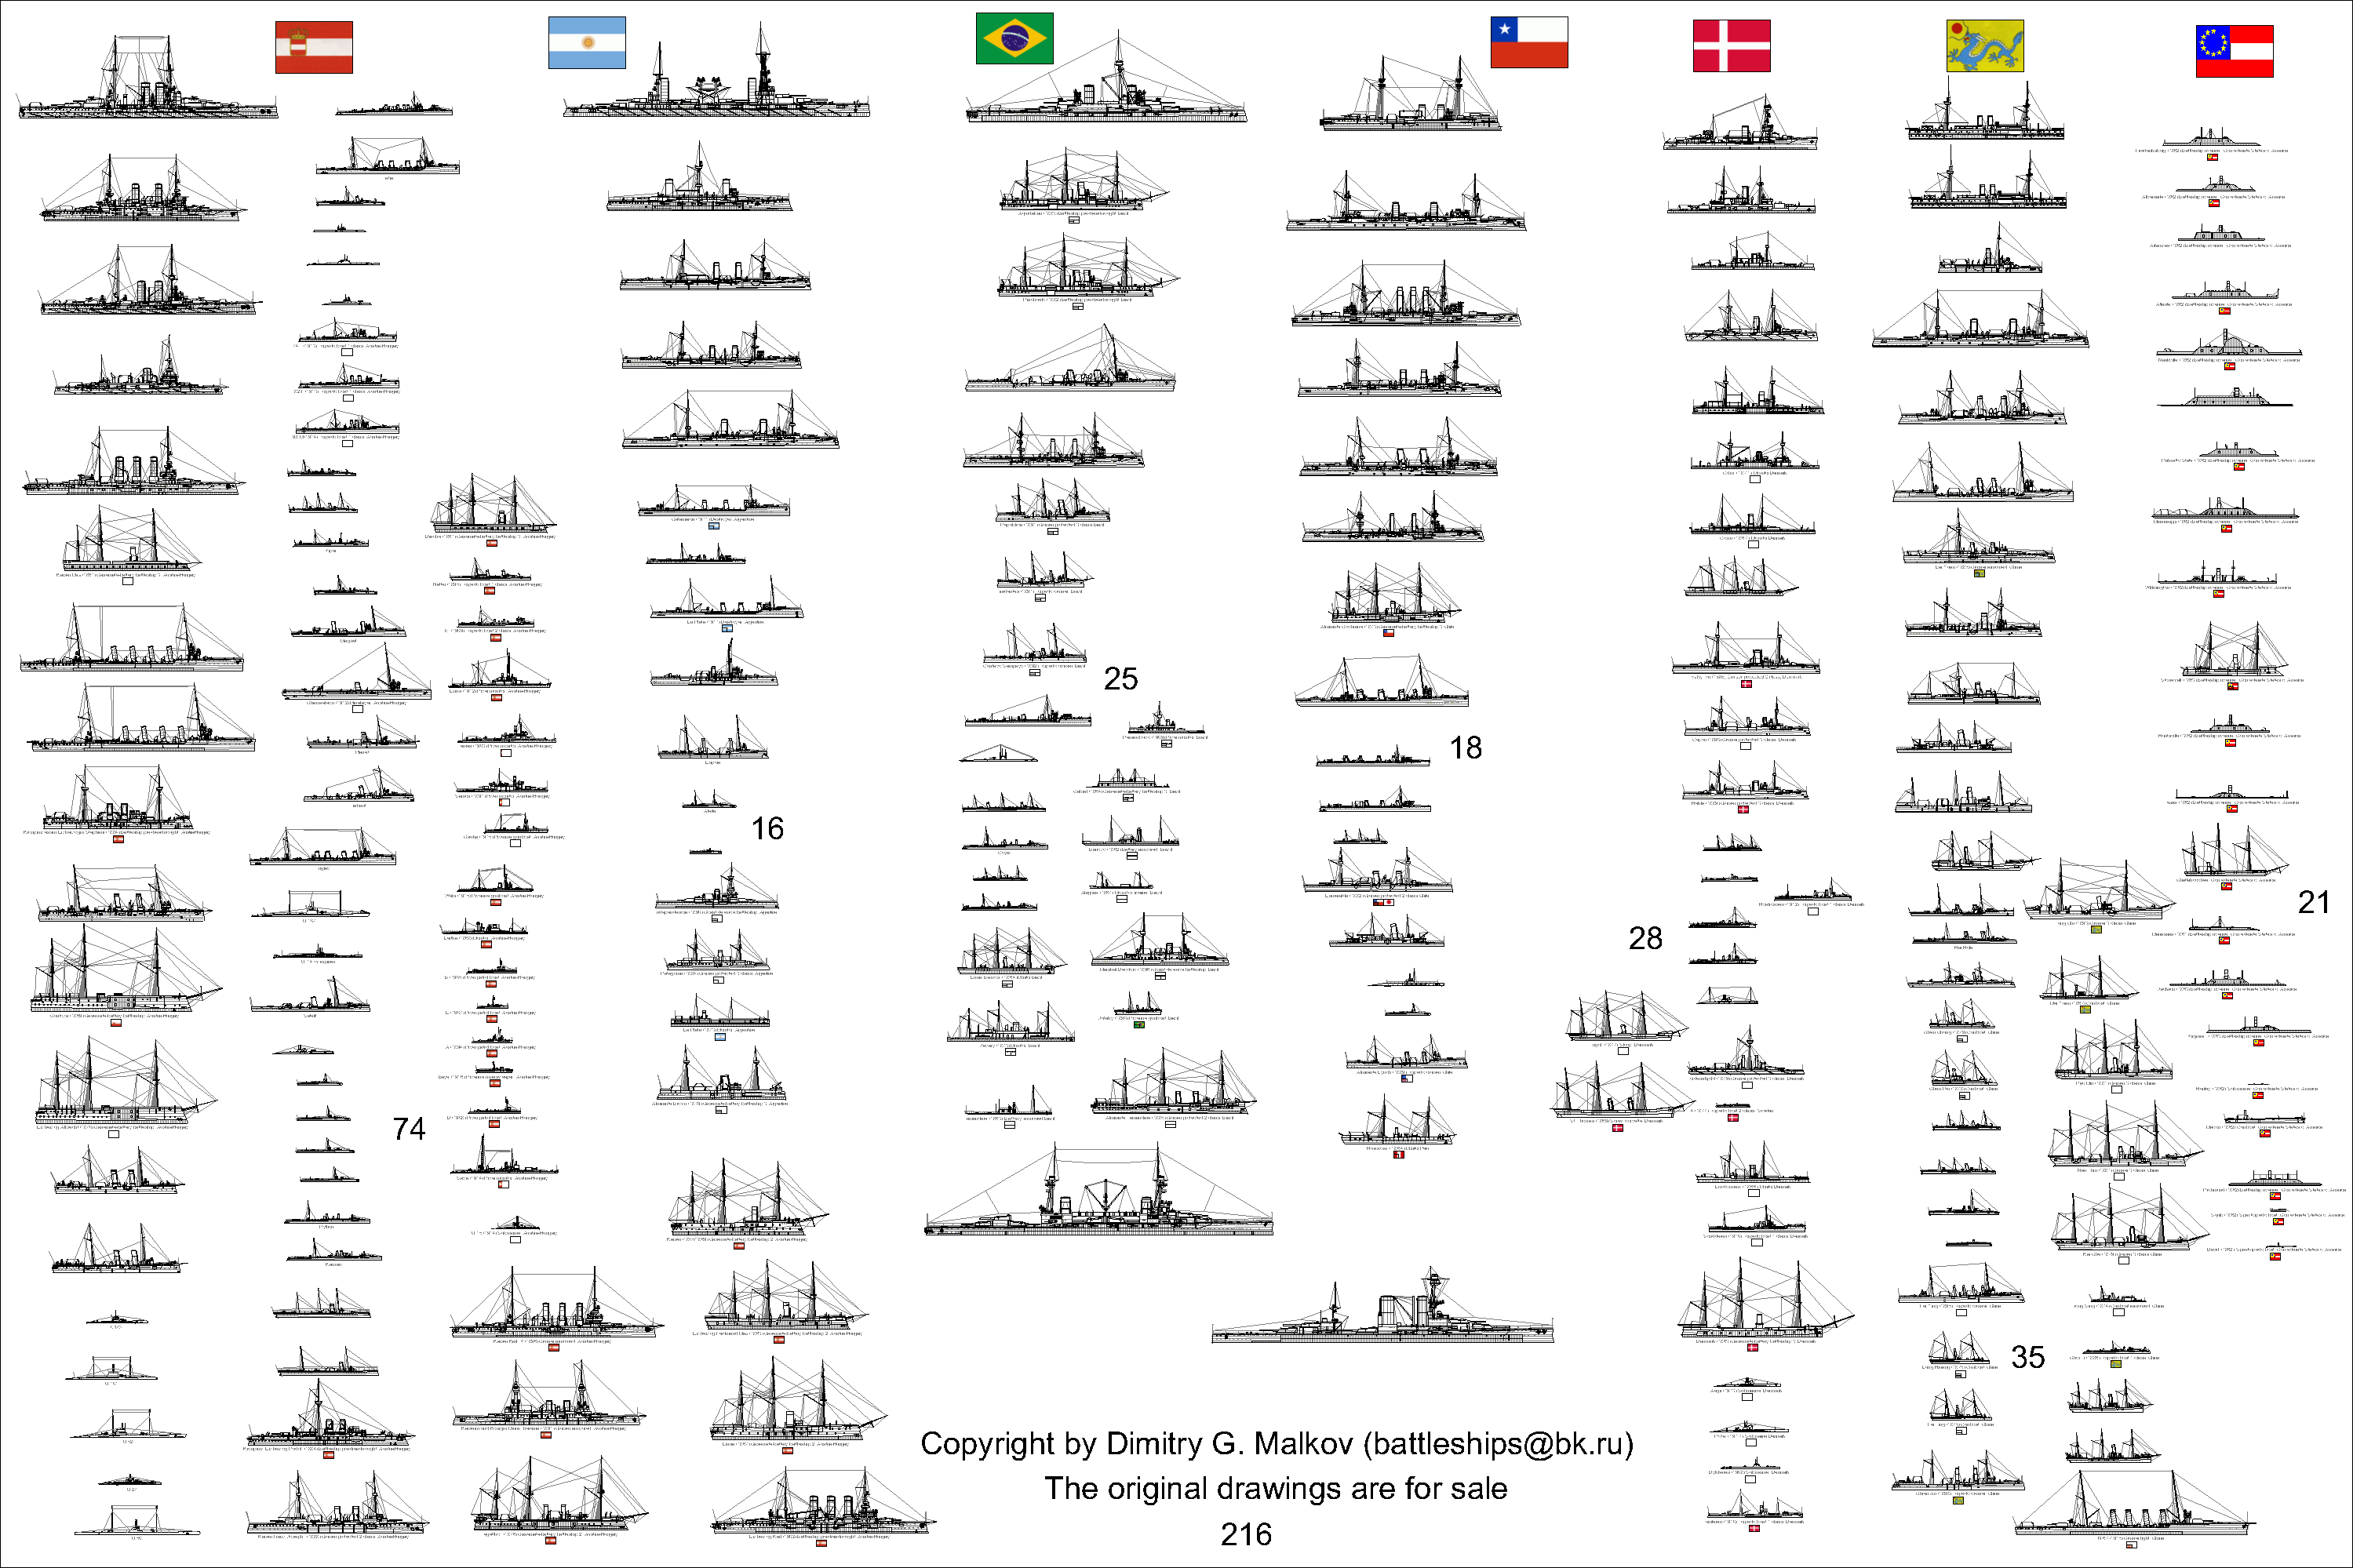 world of warships wiki indianapolis